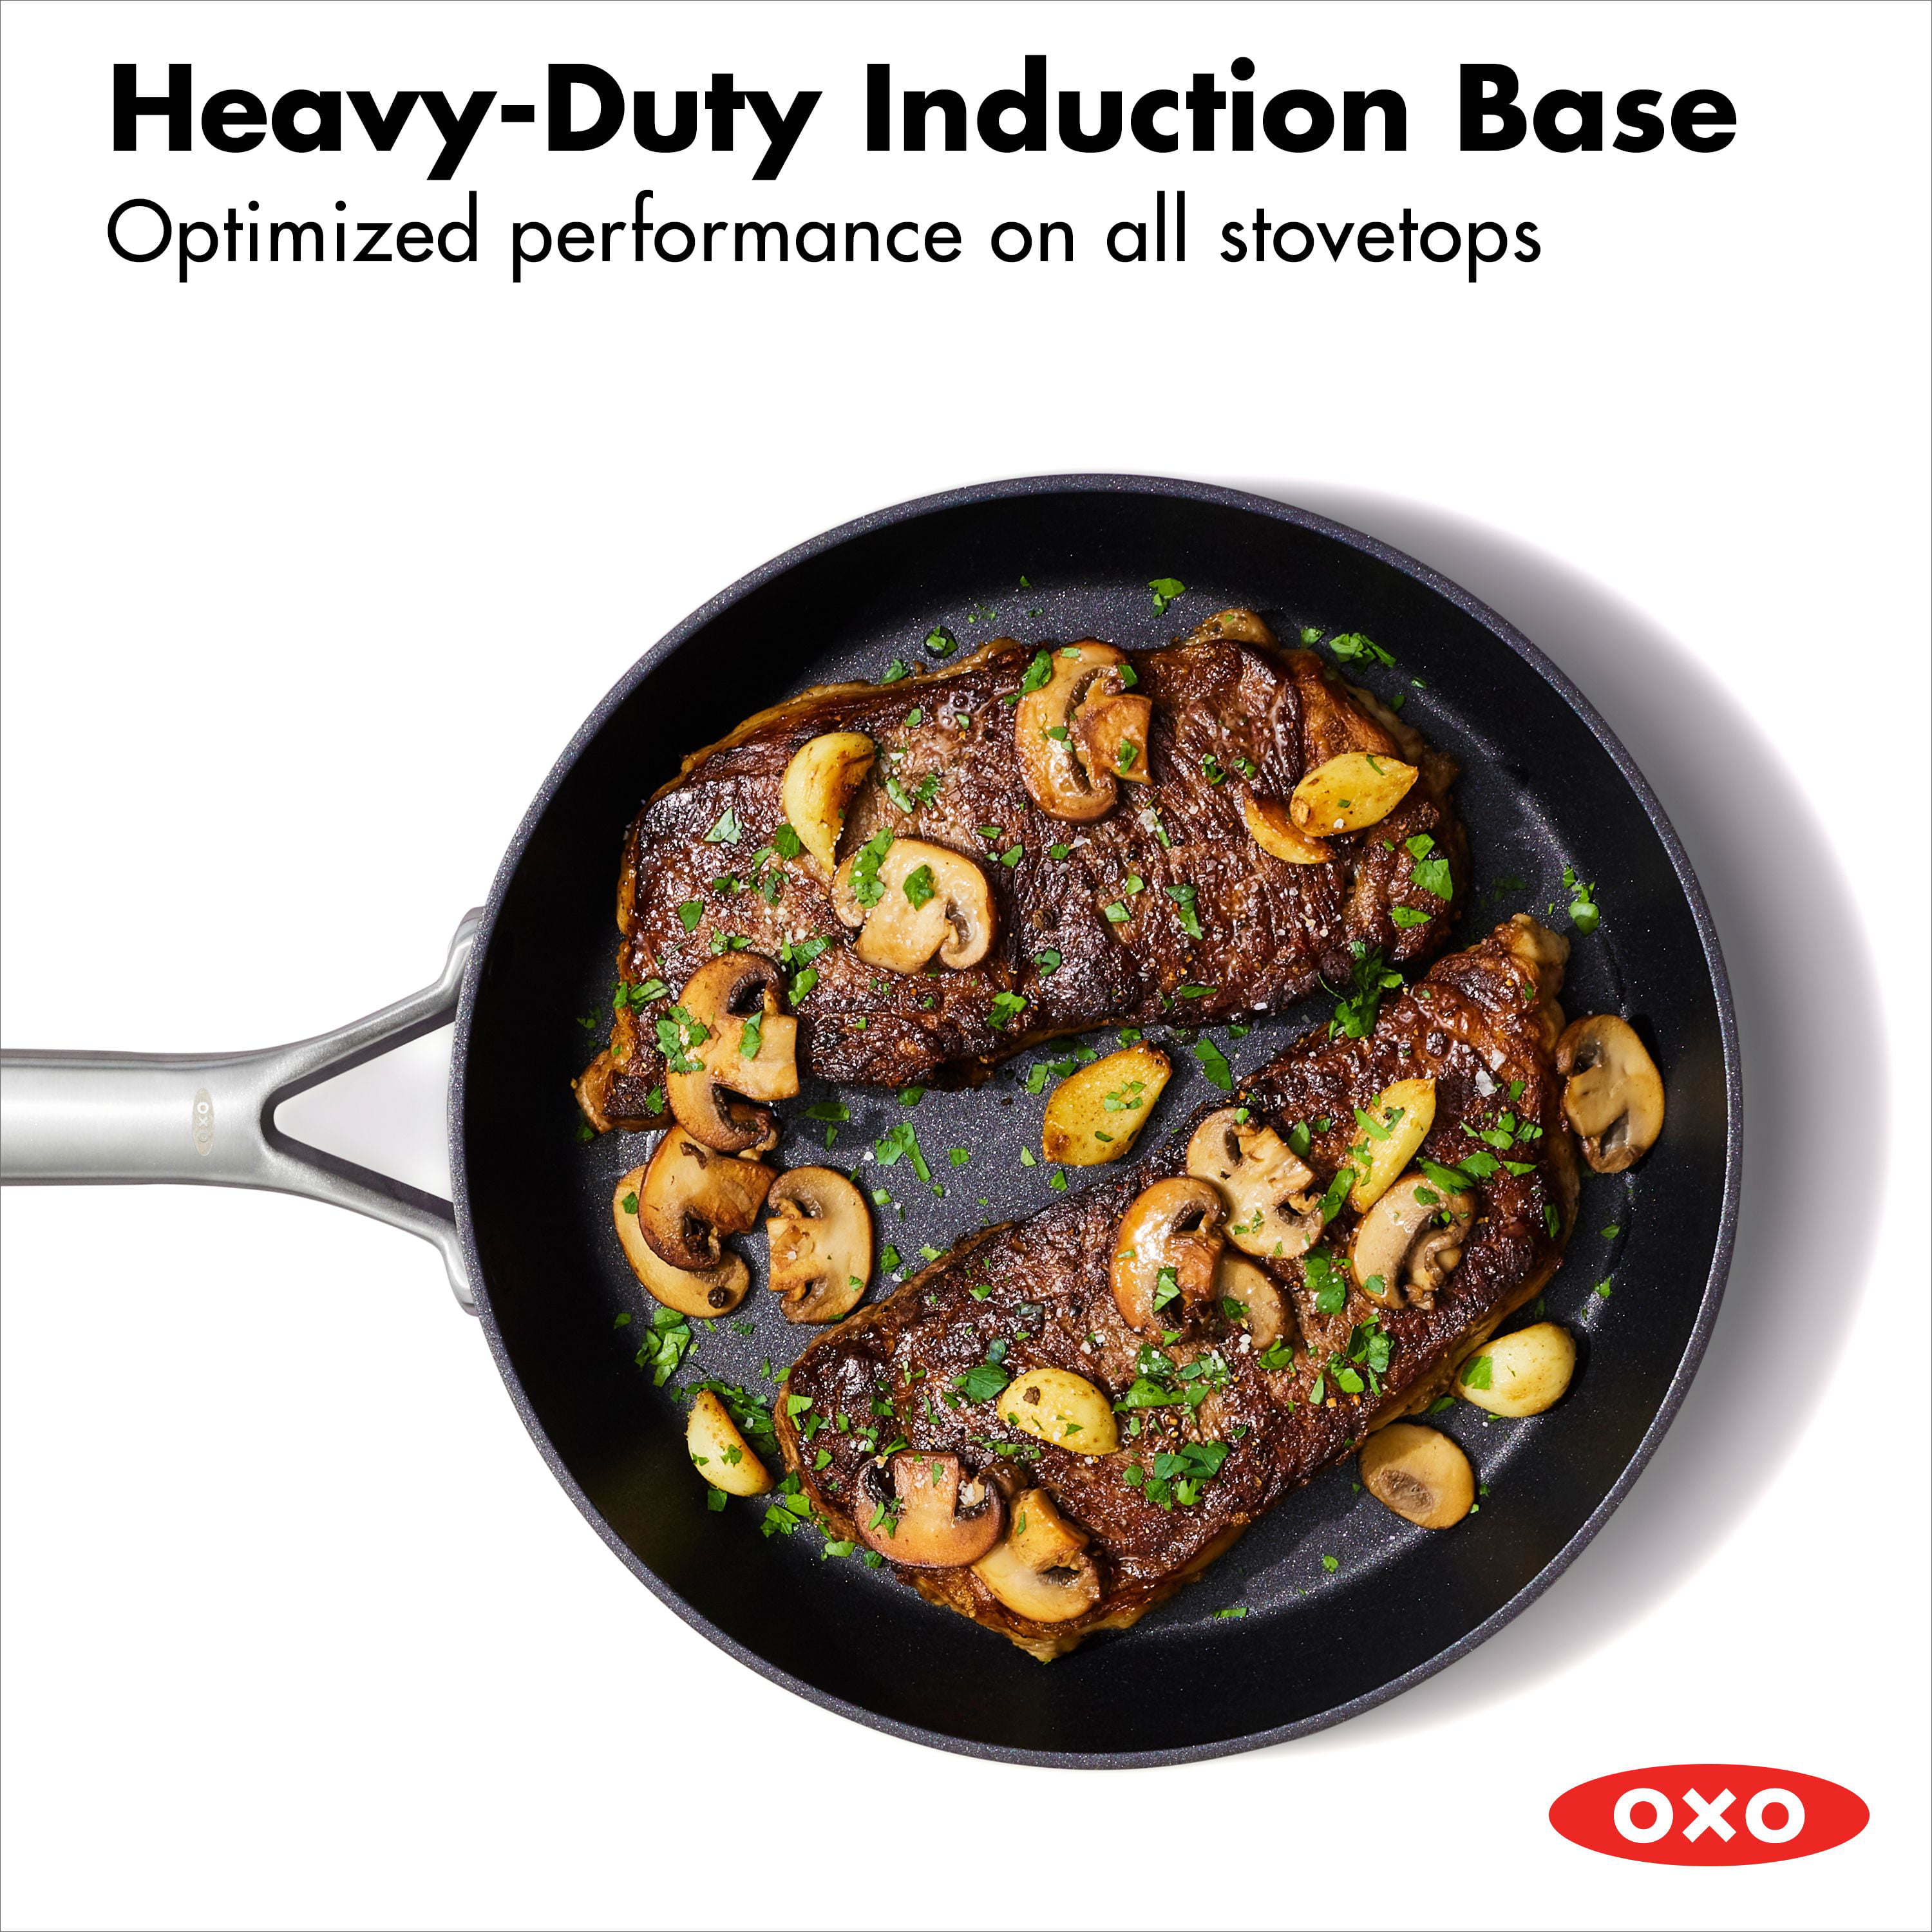 OXO Good Grips Nonstick 3-Piece Hard-Anodized Aluminum Frying Pan Set  CC005956-001 - The Home Depot